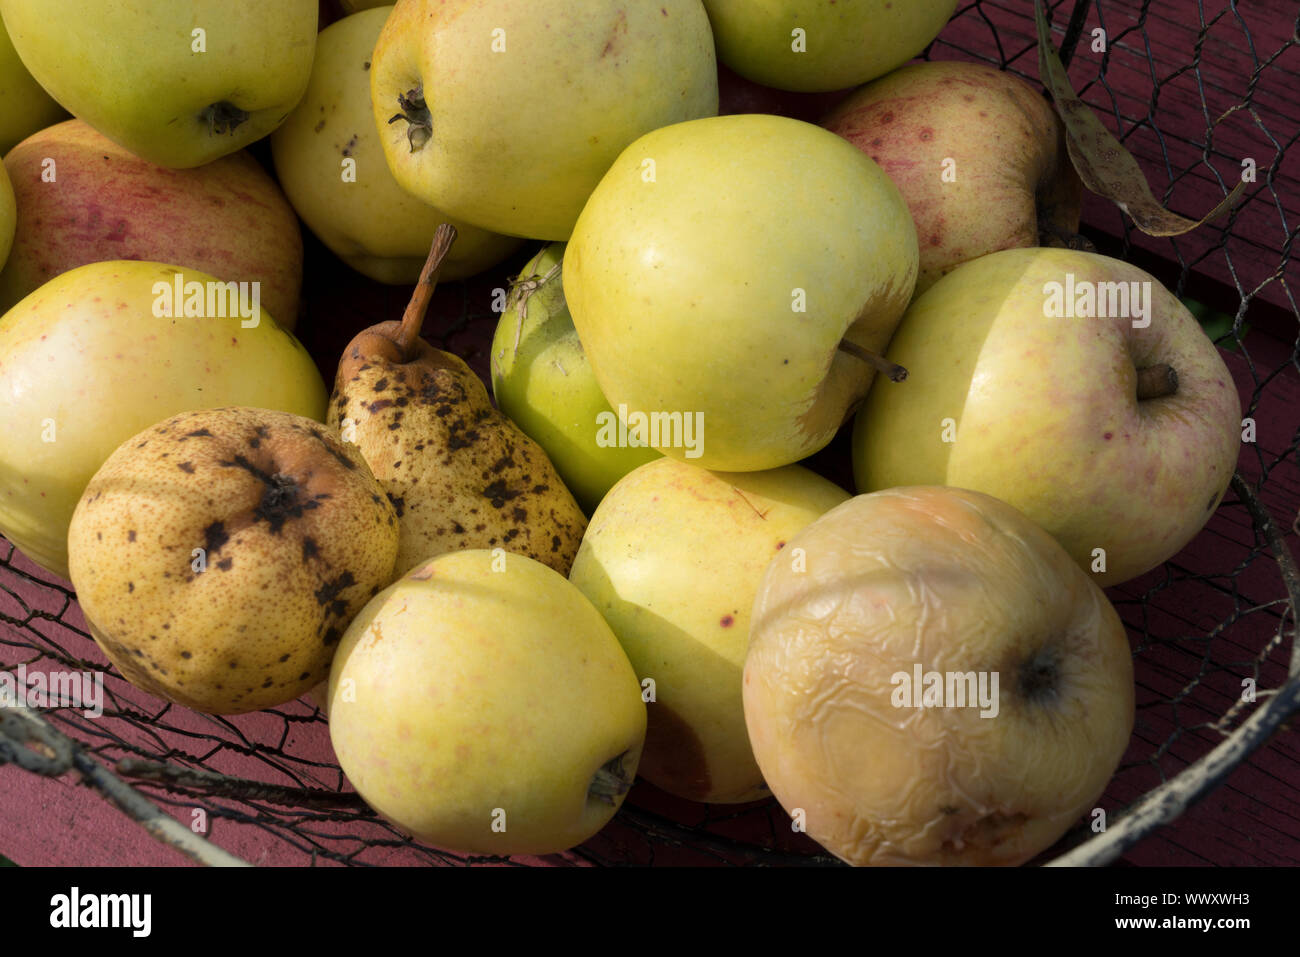 Apples, fallen fruits Stock Photo